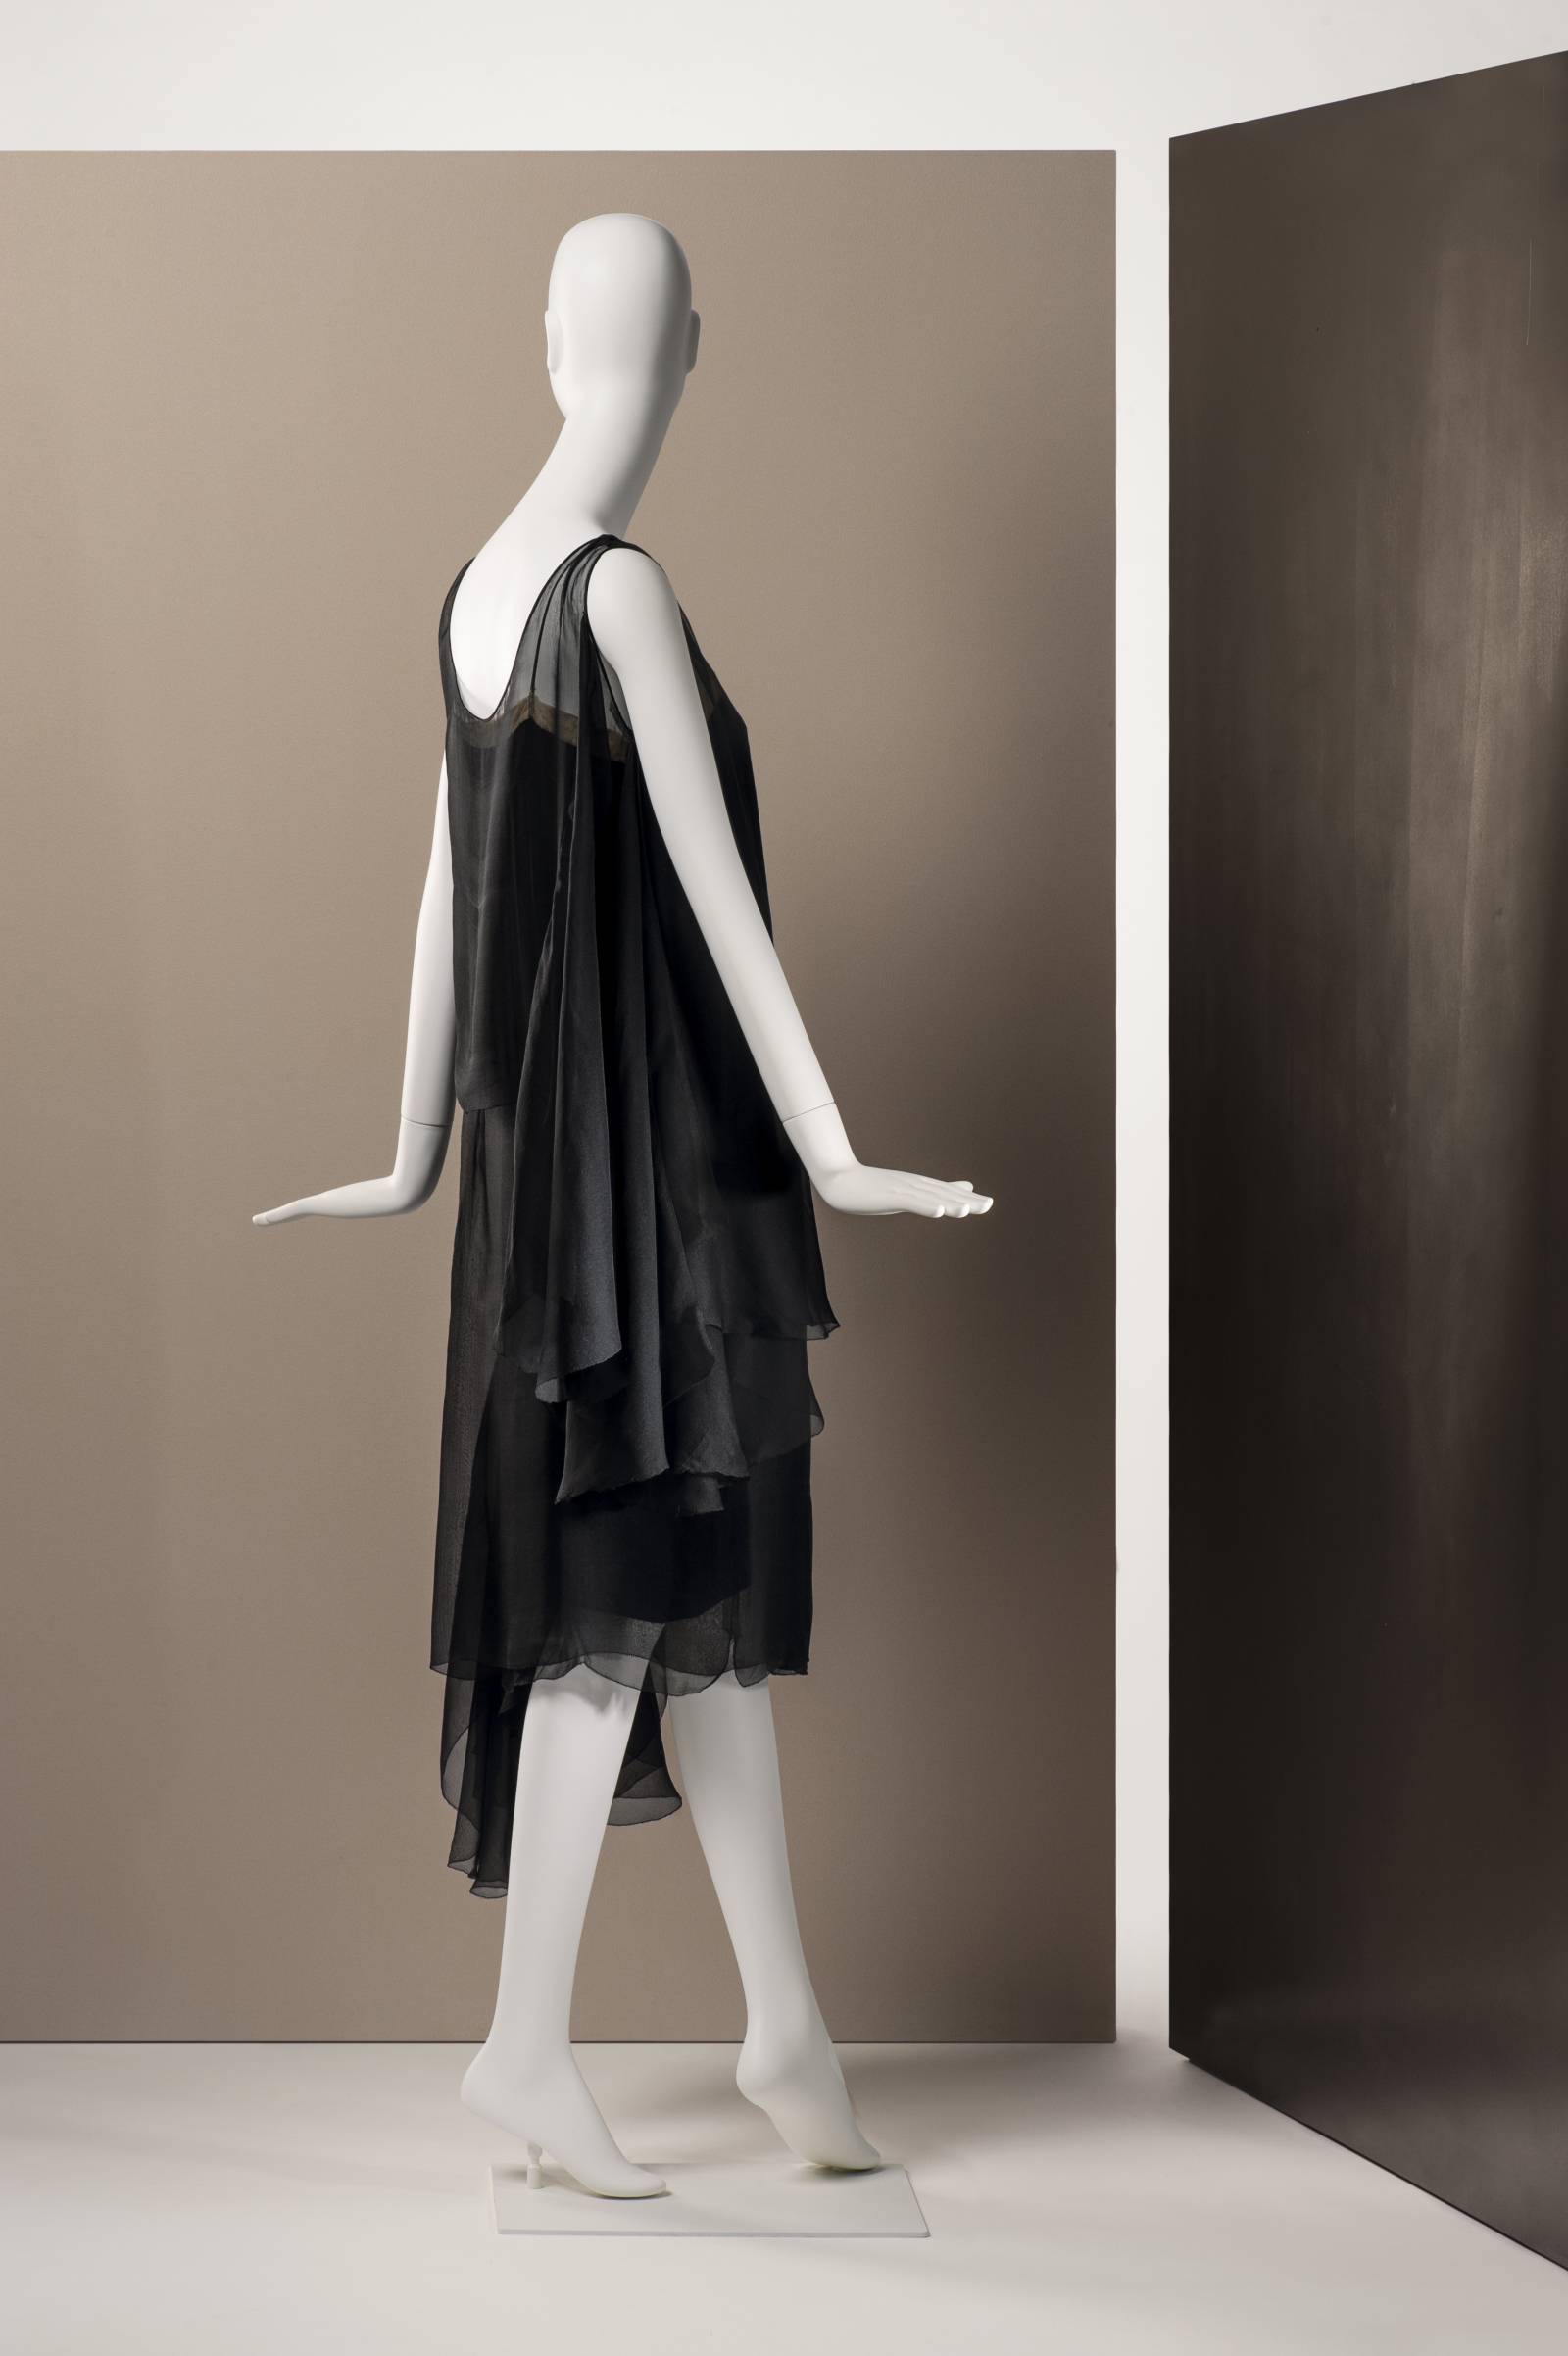 brielle Chanel, Short Evening Dress, 1925-1926, chiffon. Martin Kamer Collection, Switzerland